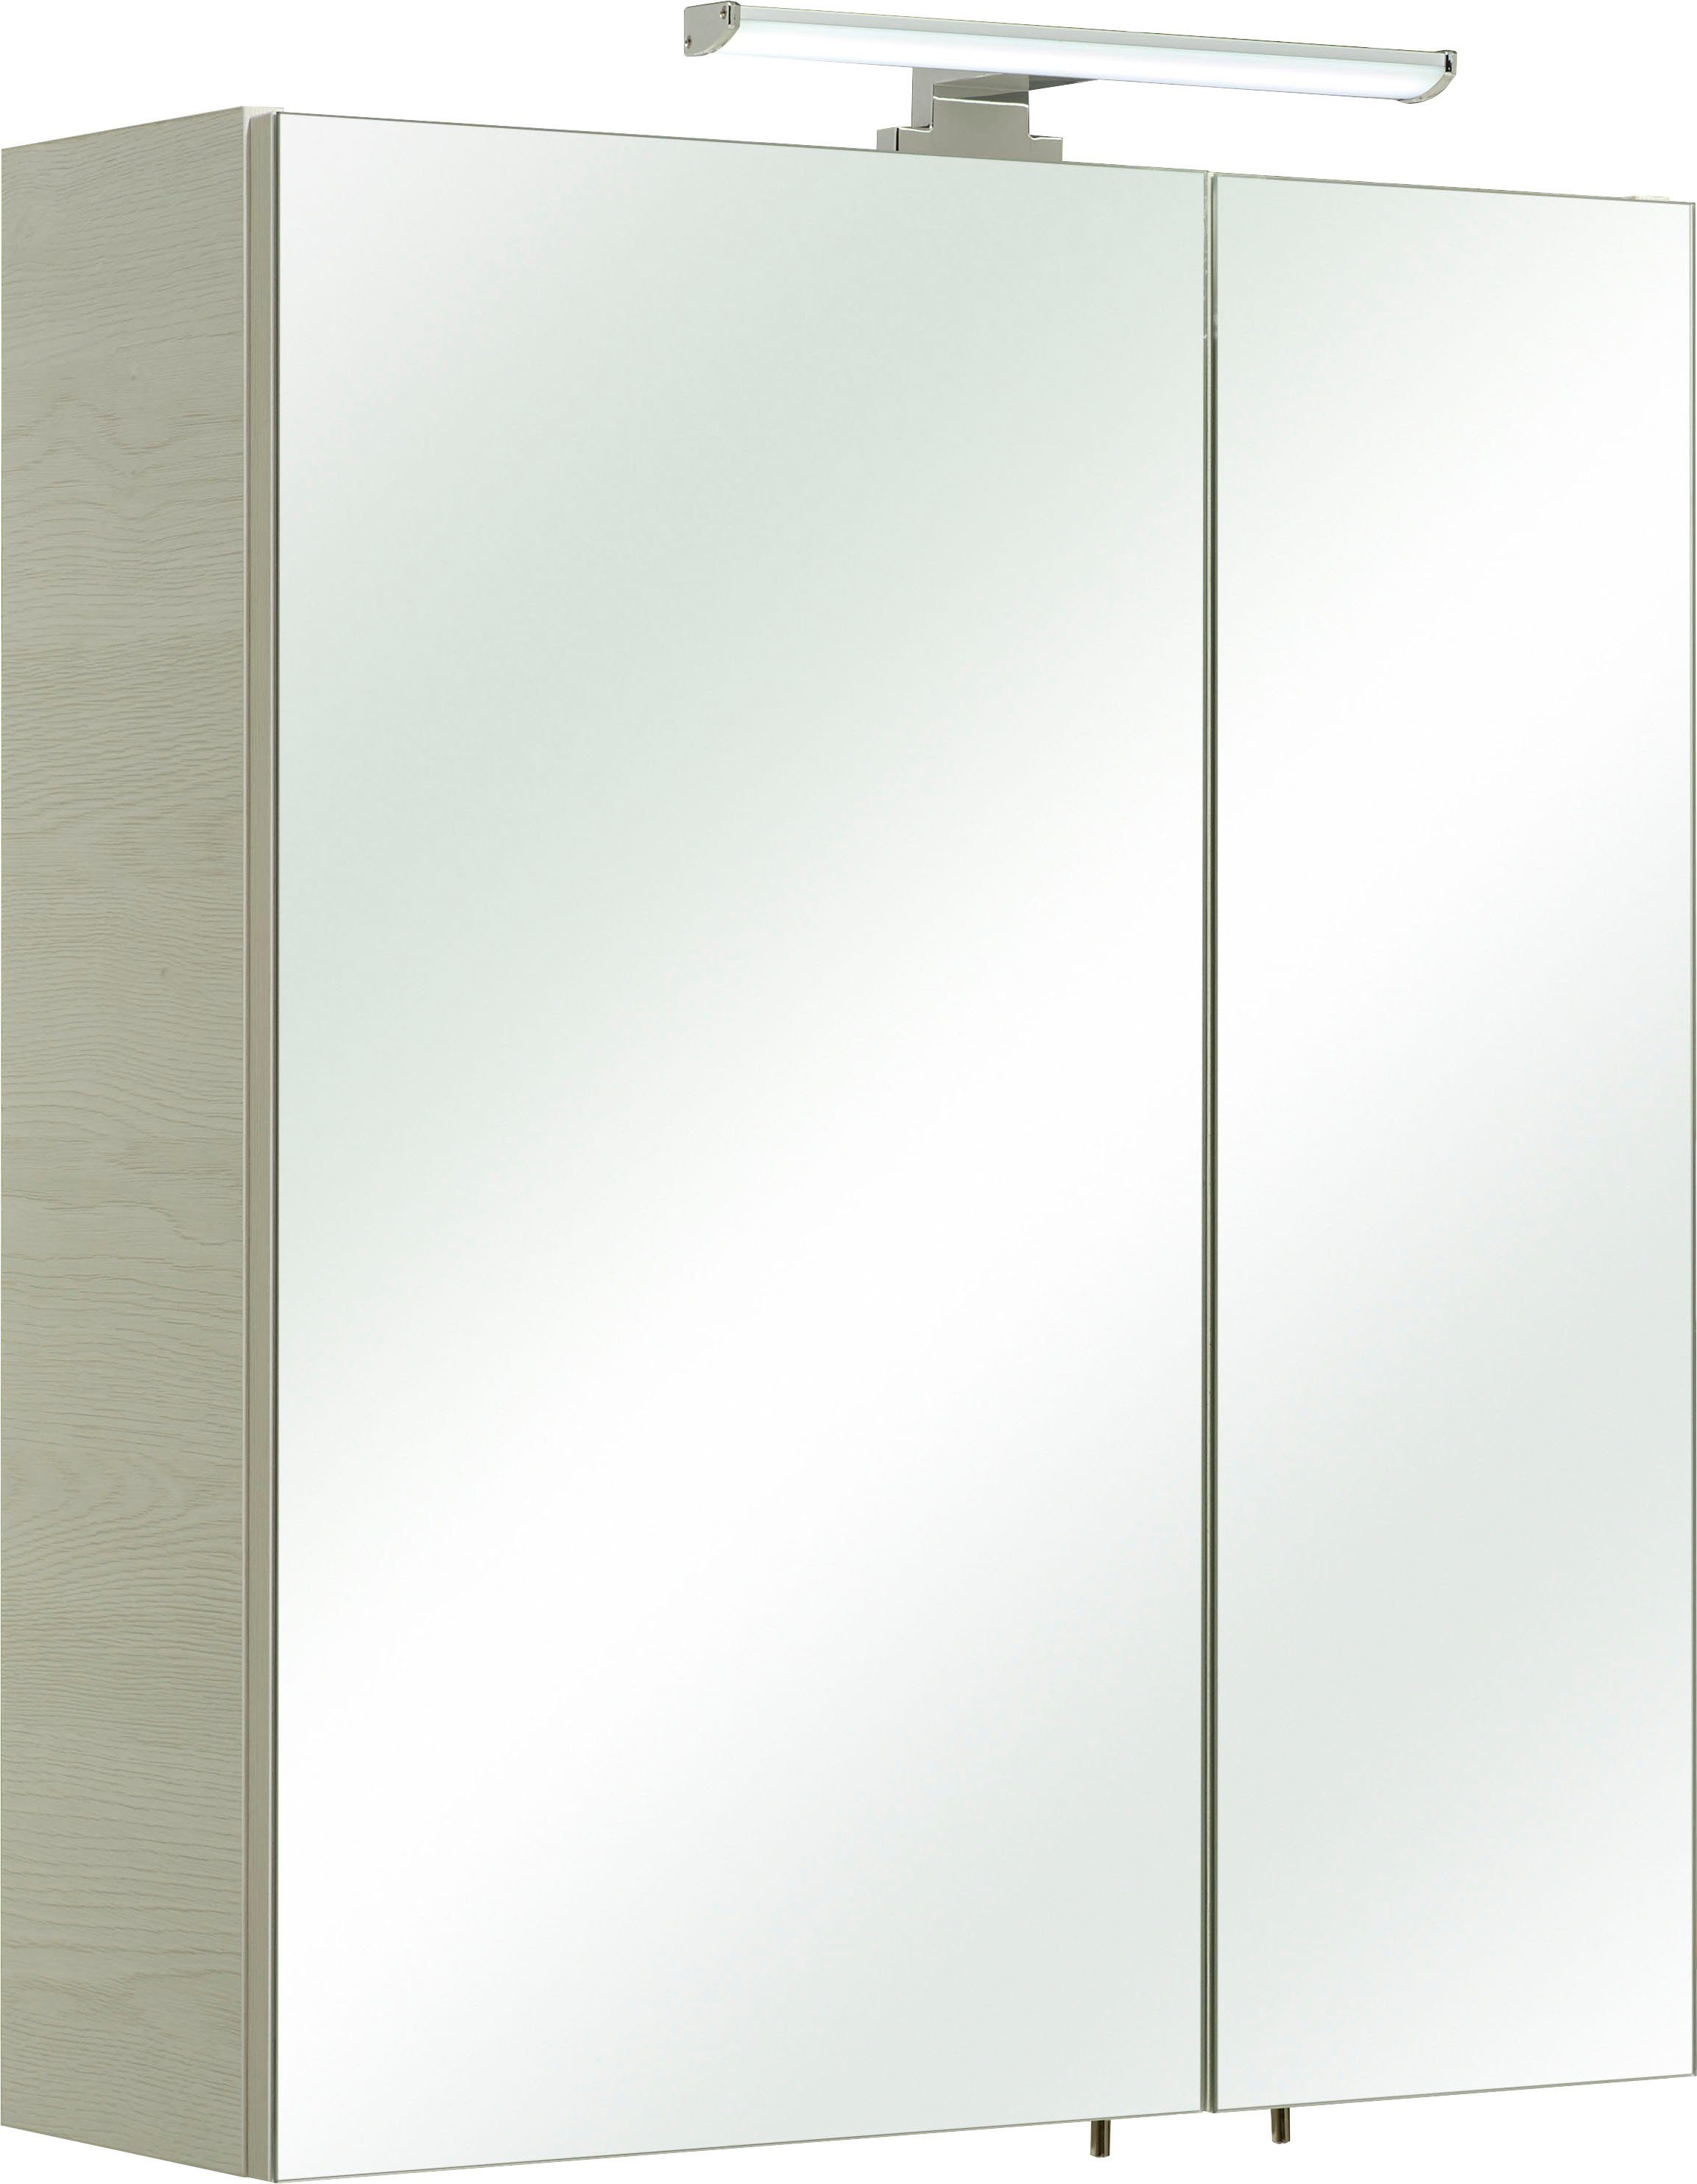 PELIPAL Spiegelschrank Schalter-/Steckdosenbox 936 60 cm, 2-türig, Quickset Breite LED-Beleuchtung